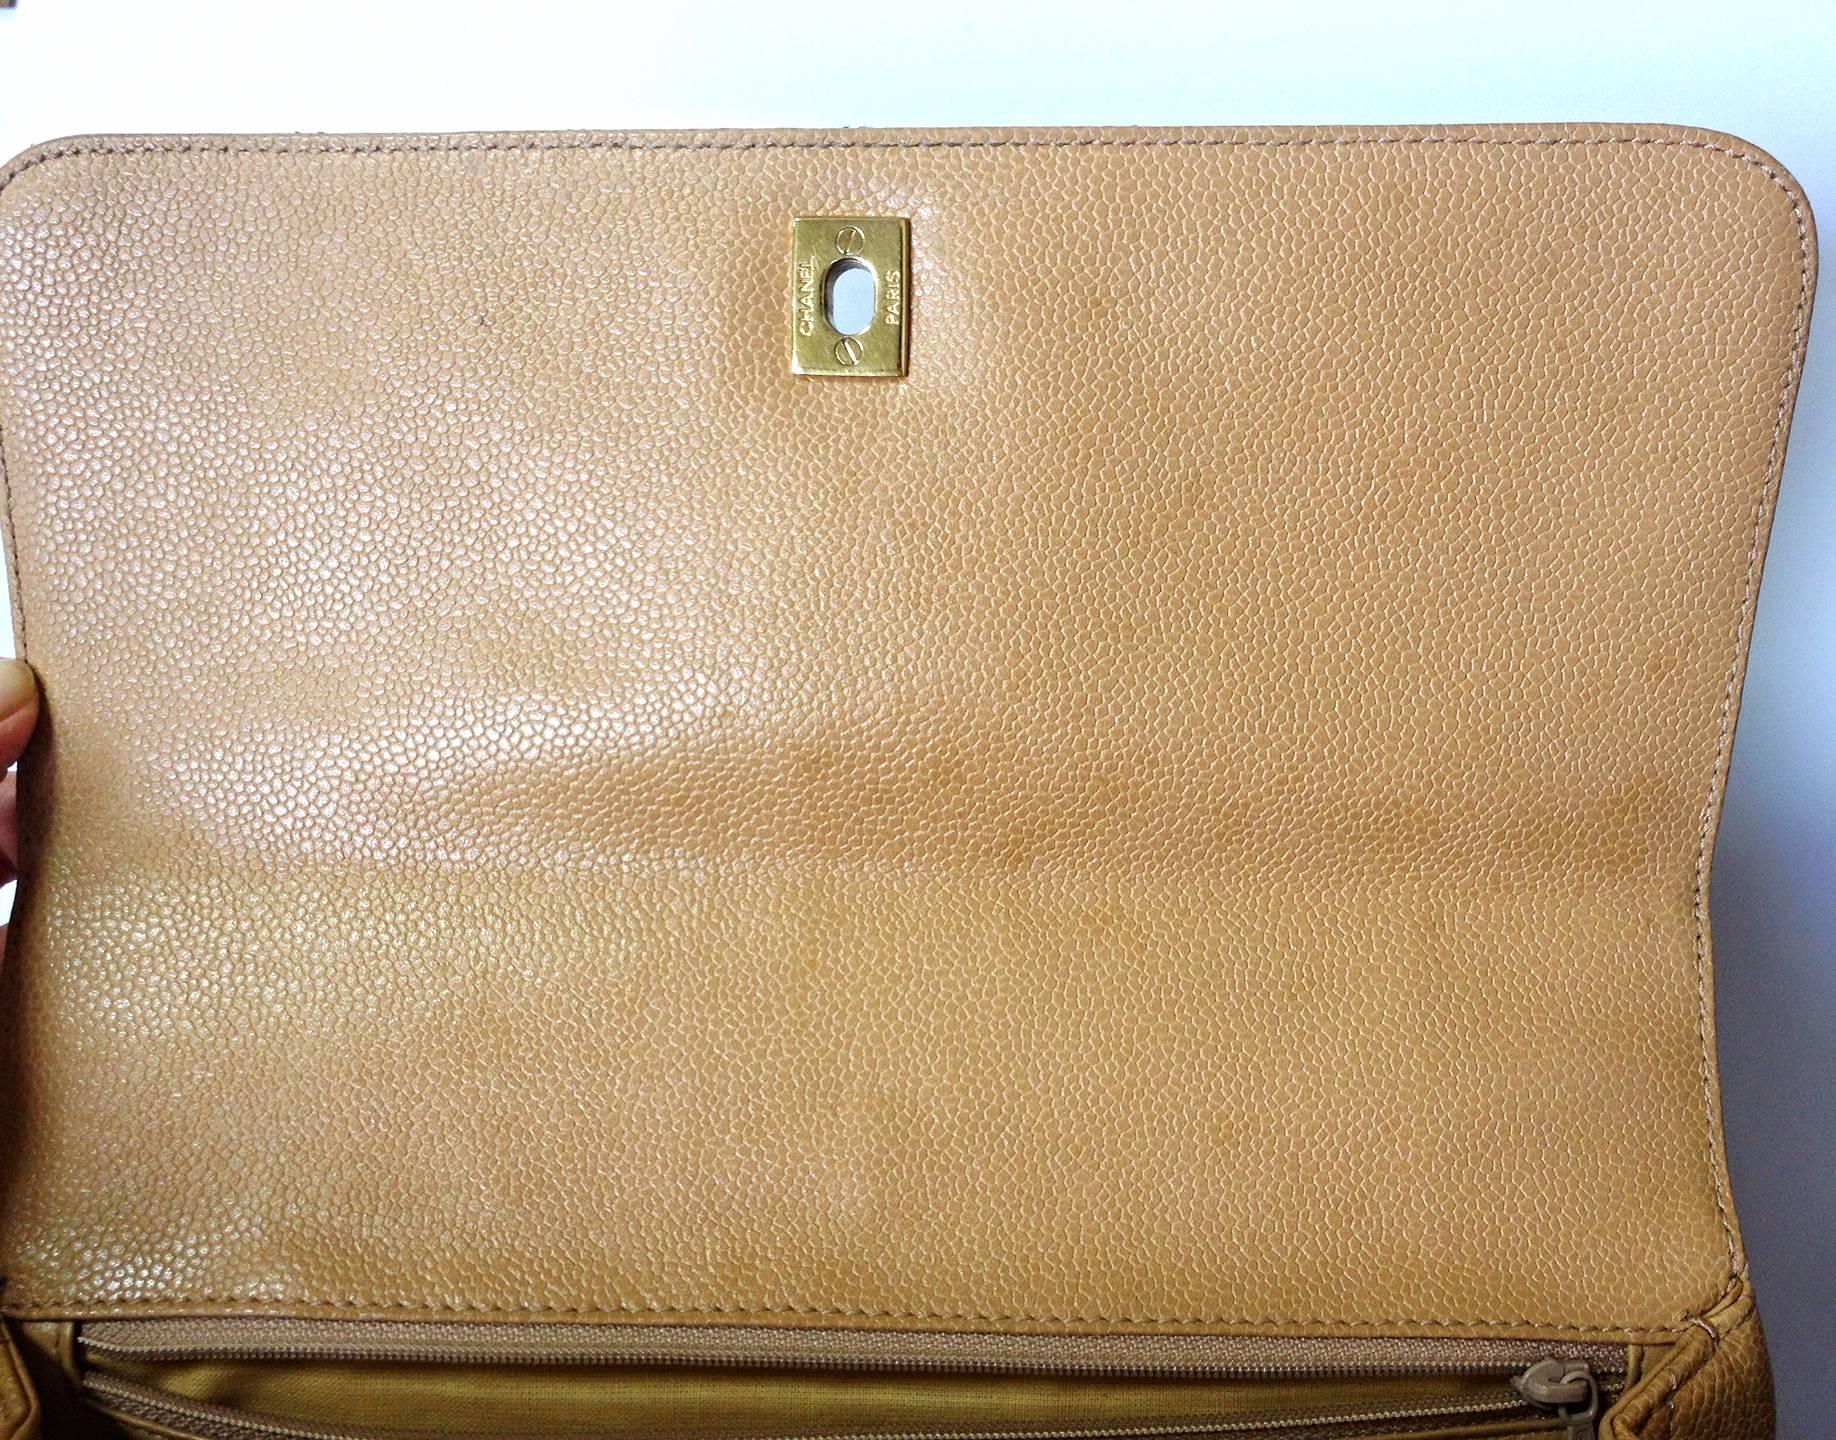 Vintage CHANEL beige brown caviar leather kelly handbag with golden CC closure.  2